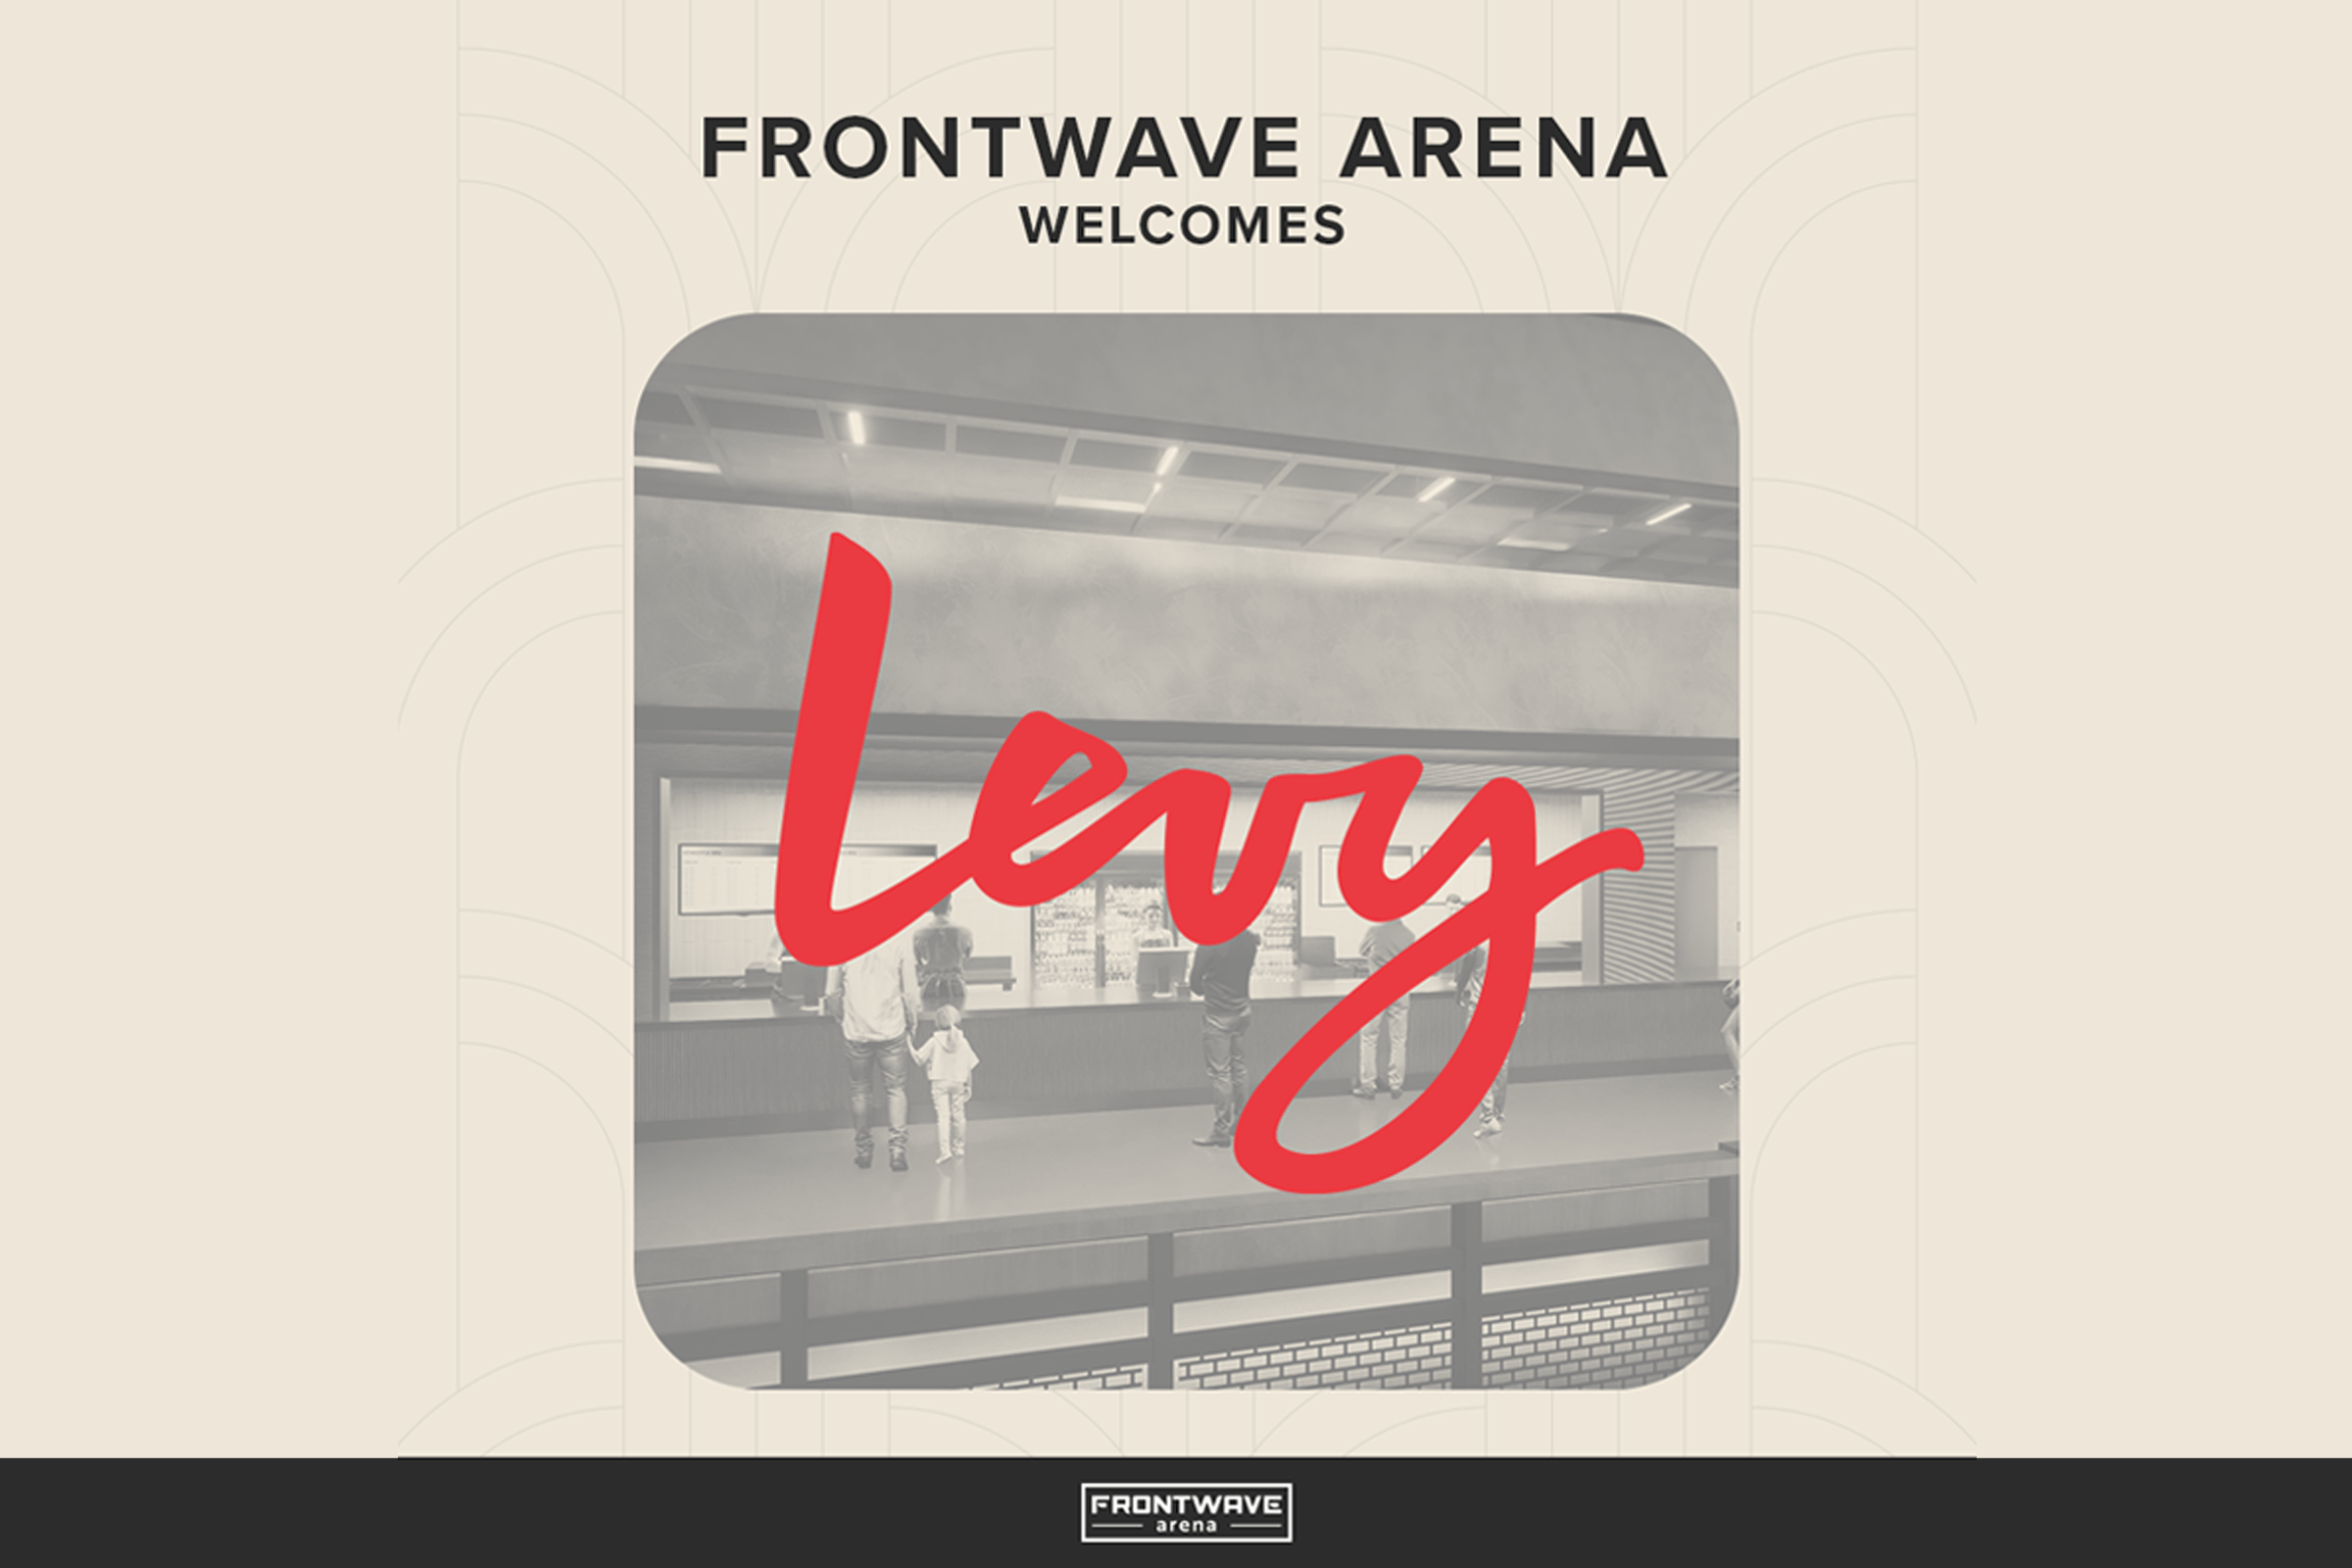 Frontwave arena welcomes levy